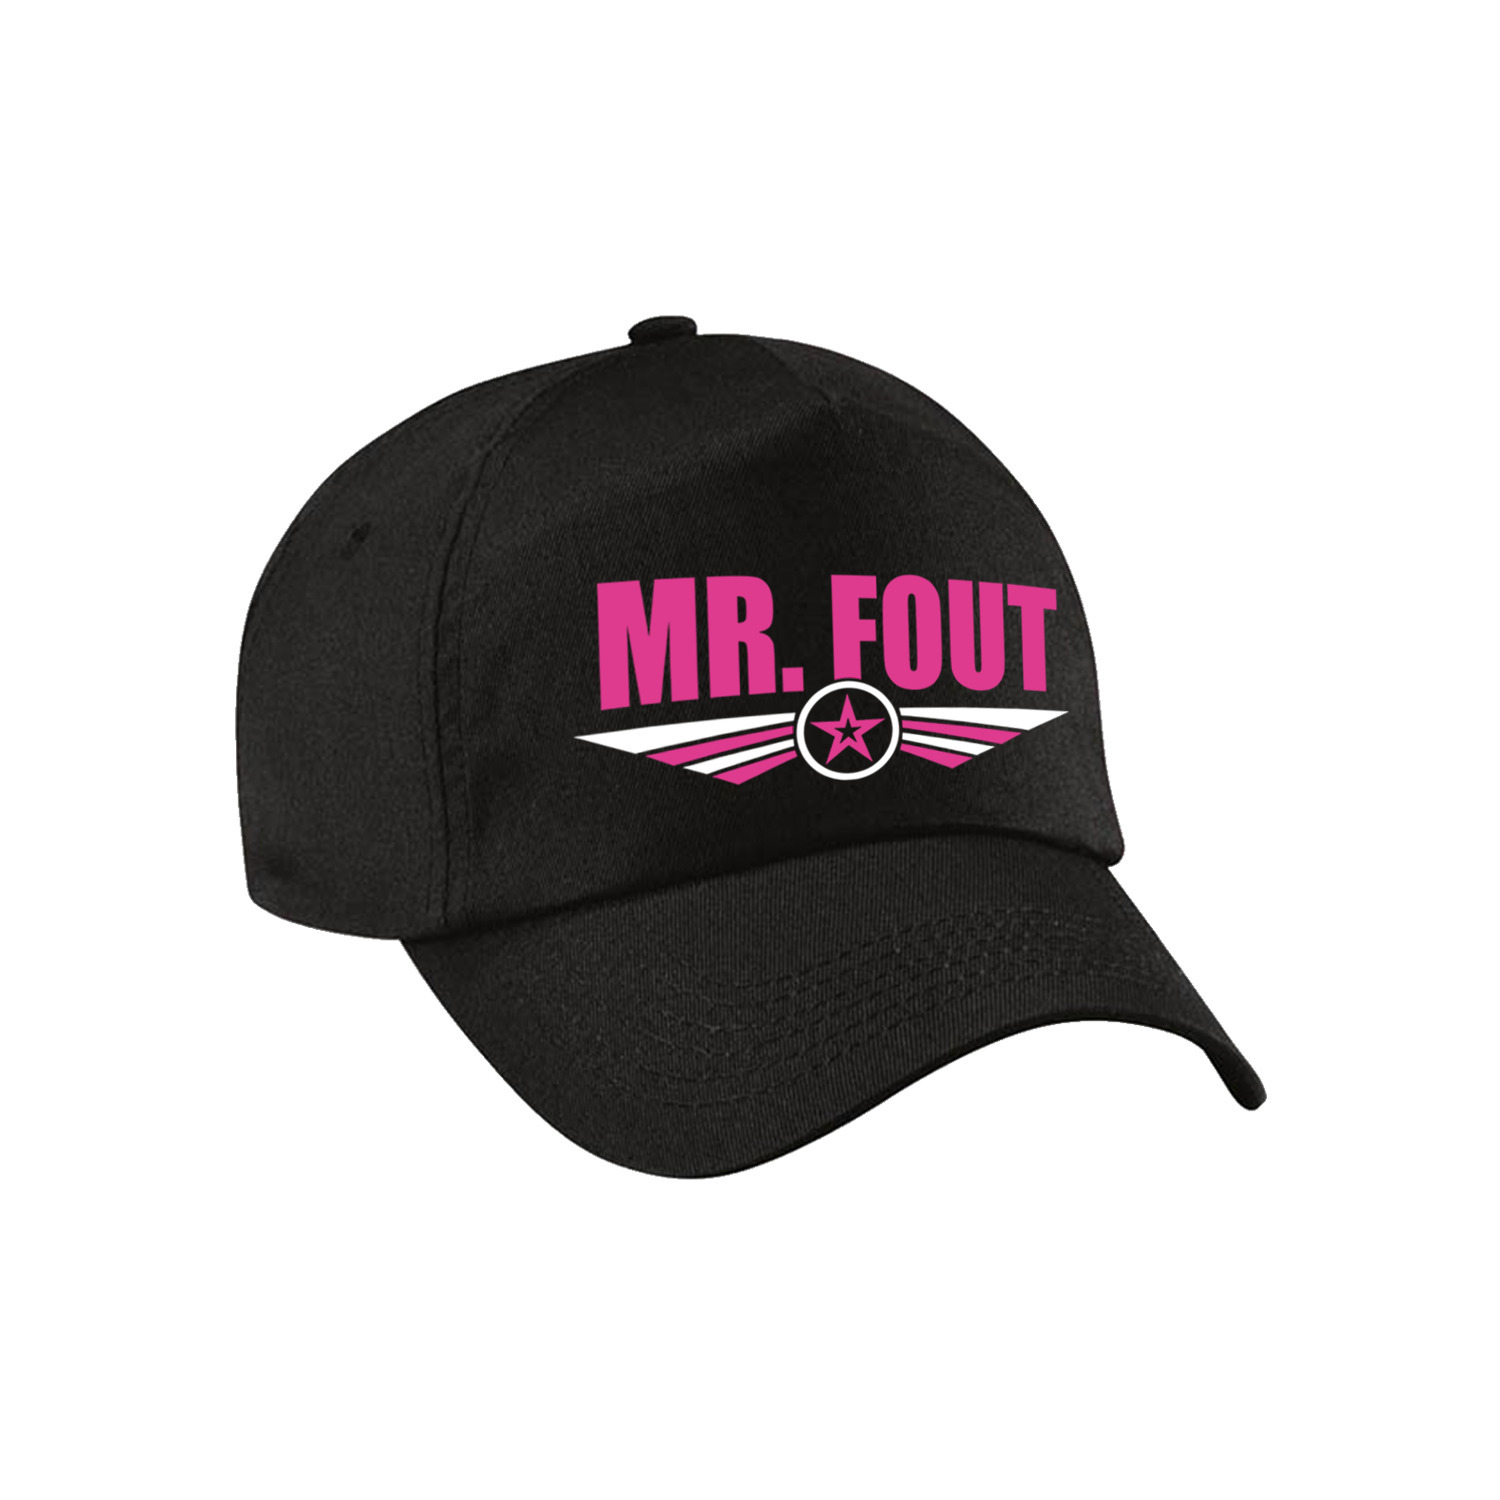 Mr fout tekst pet - baseball cap foute party roze op zwart voor heren